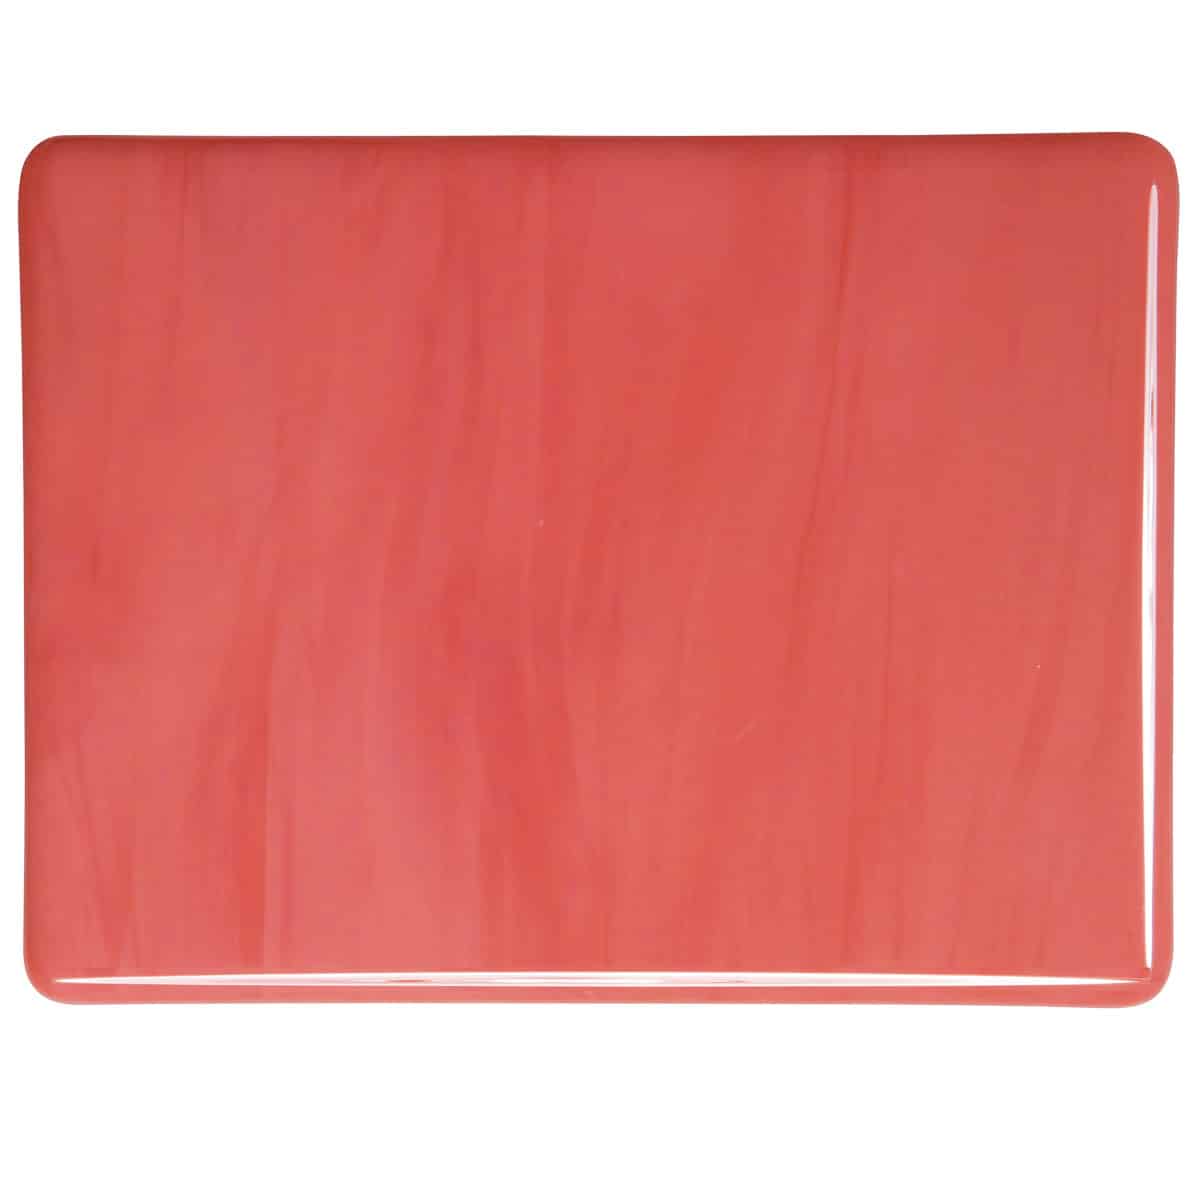 Salmon Pink Opal sheet glass swatch